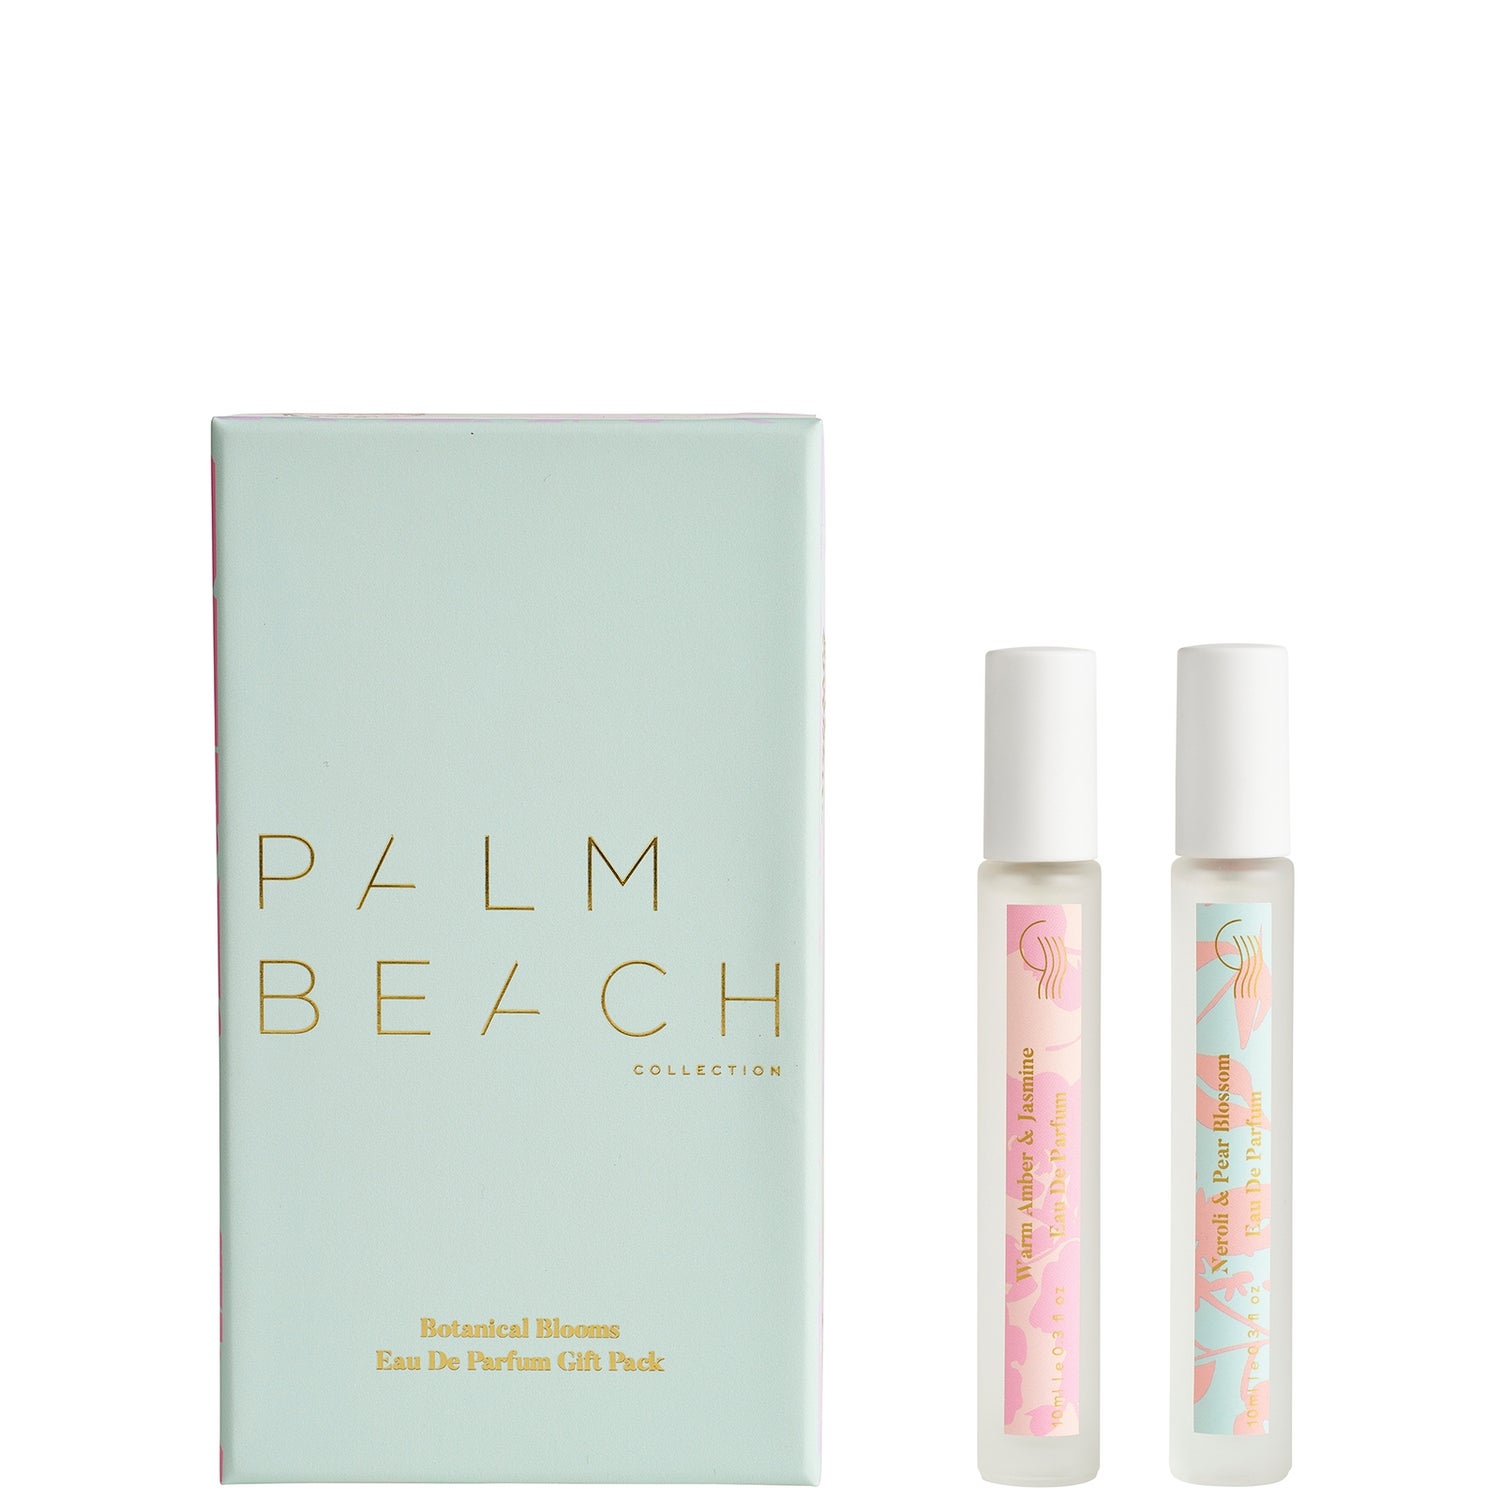 Palm Beach Collection Limited Edition Botanical Blooms Eau de Parfum Gift Pack